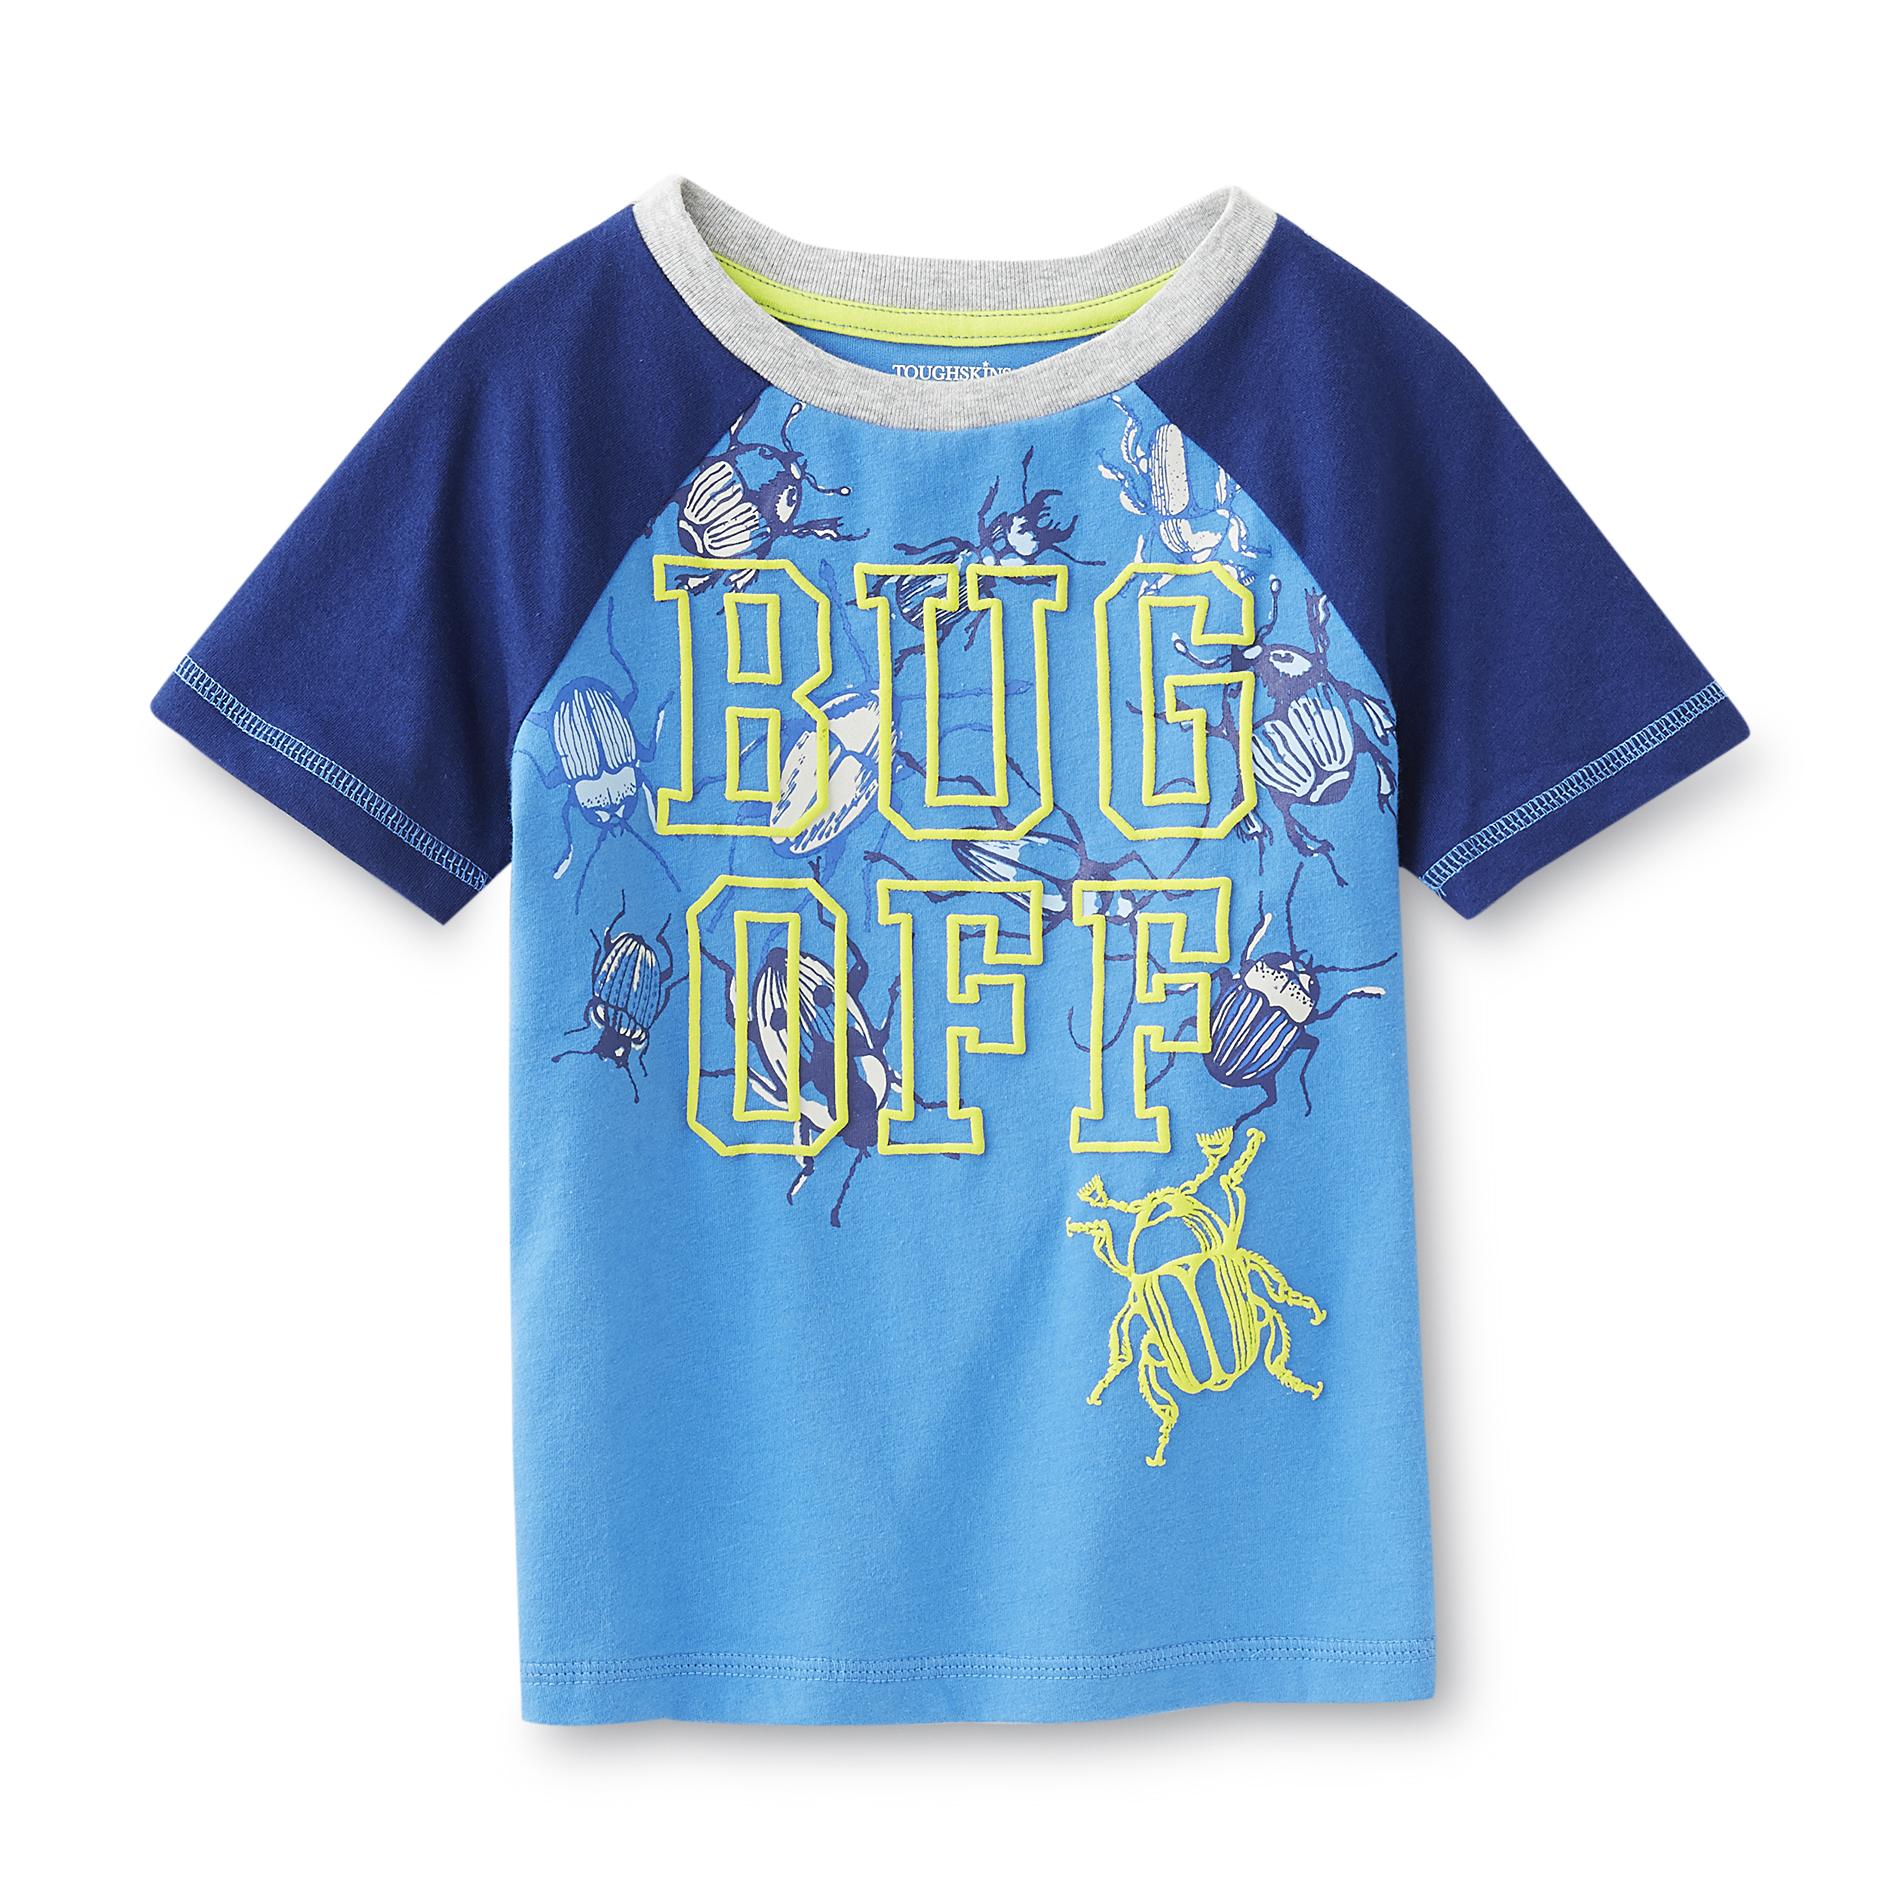 Toughskins Infant & Toddler Boy's Graphic T-Shirt - Bug Off